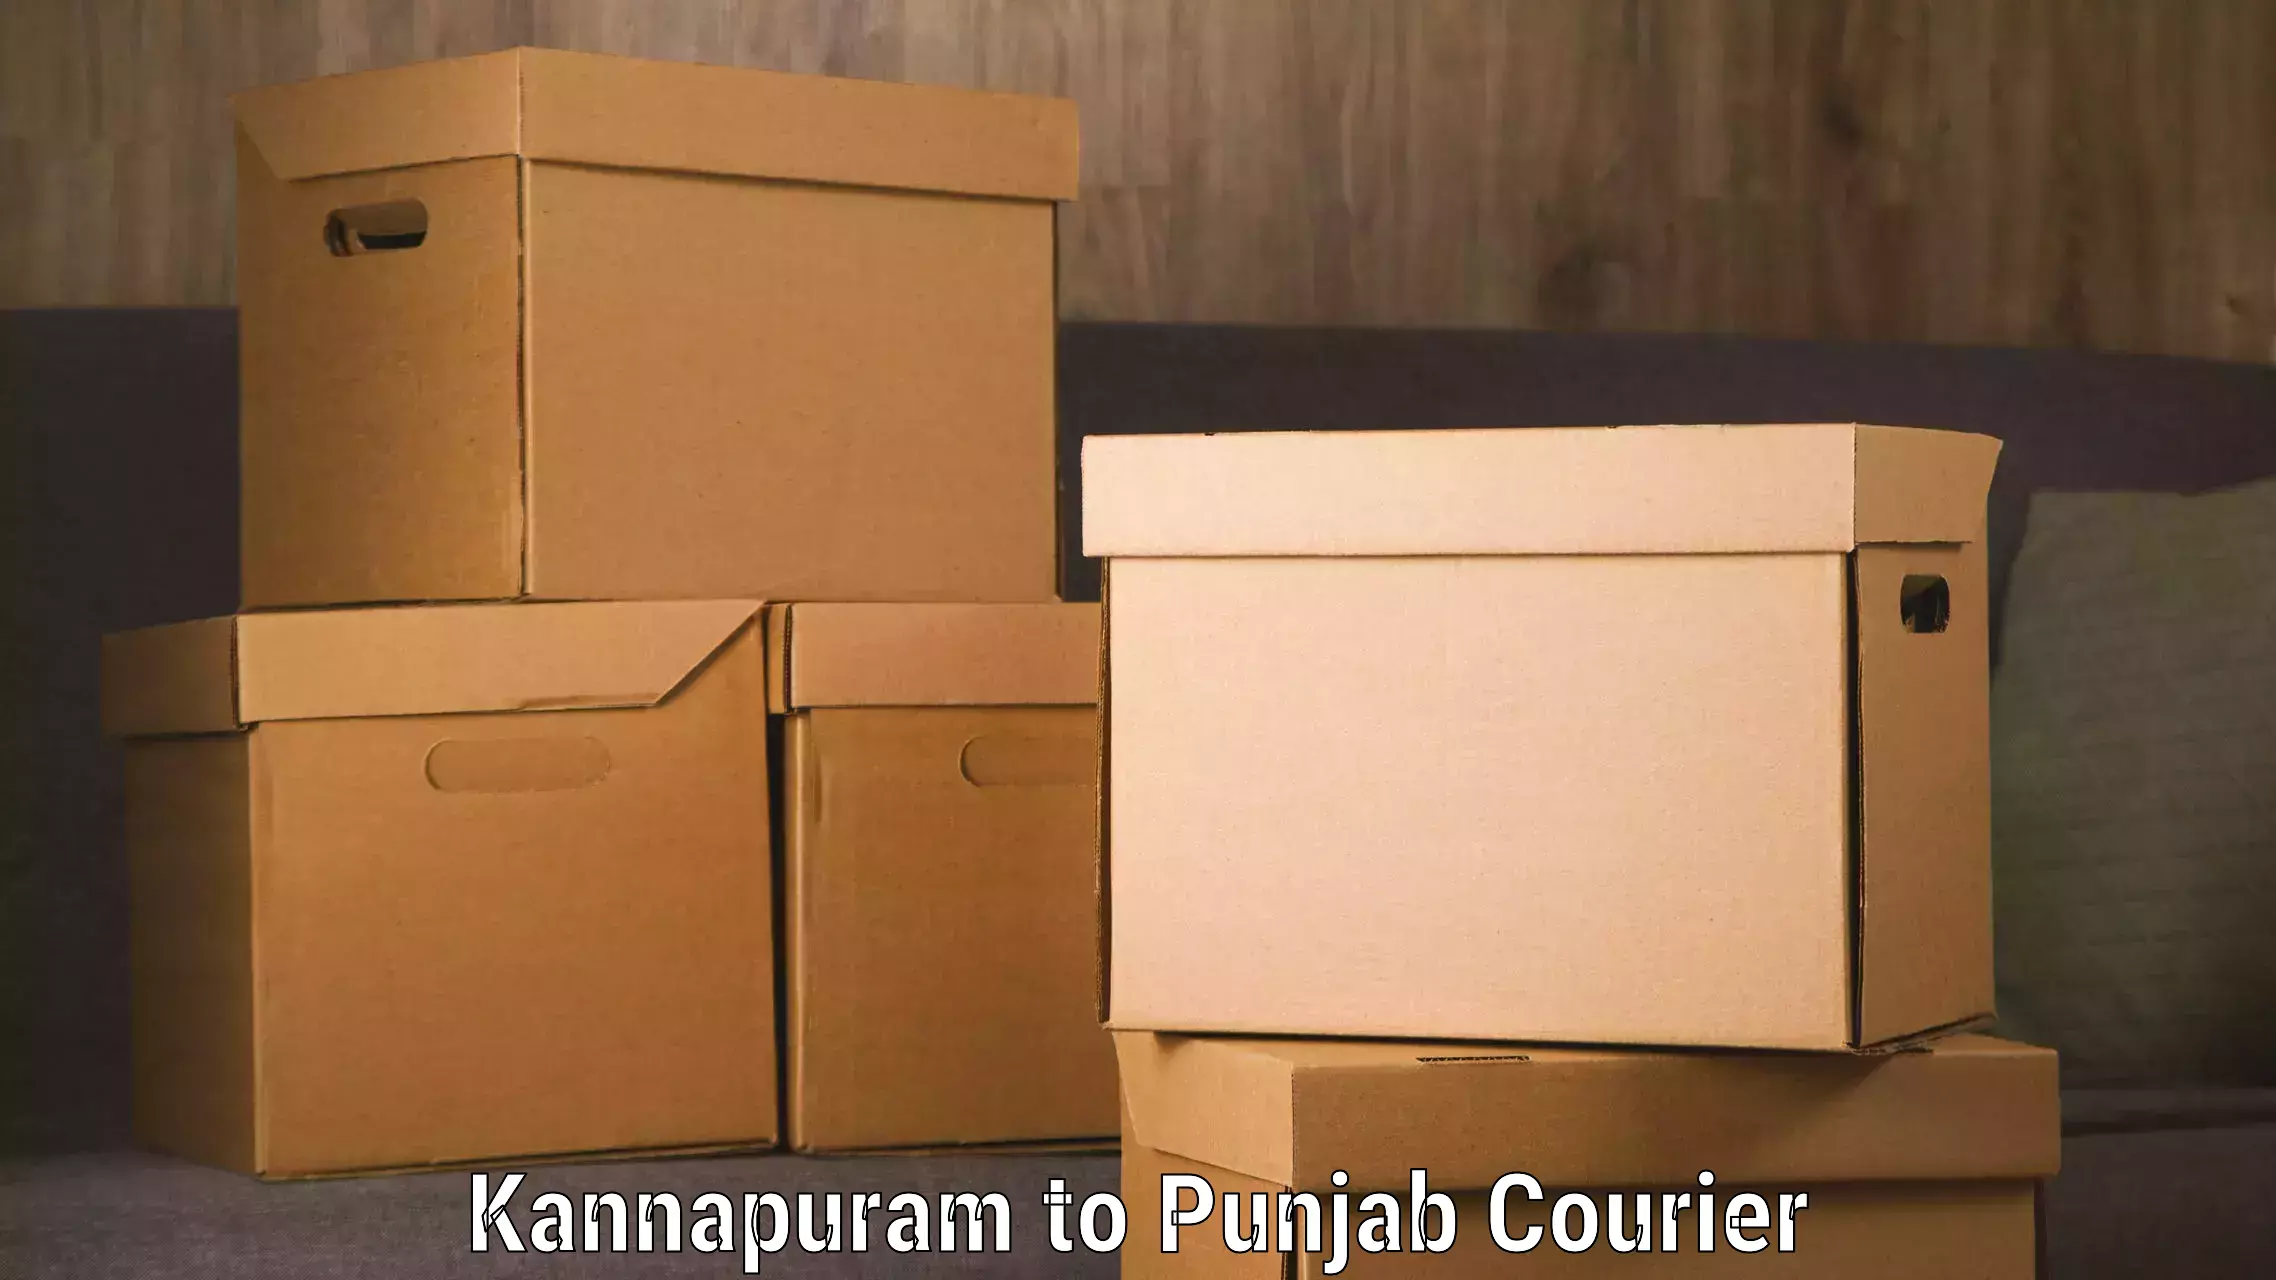 Express courier capabilities Kannapuram to Mohali